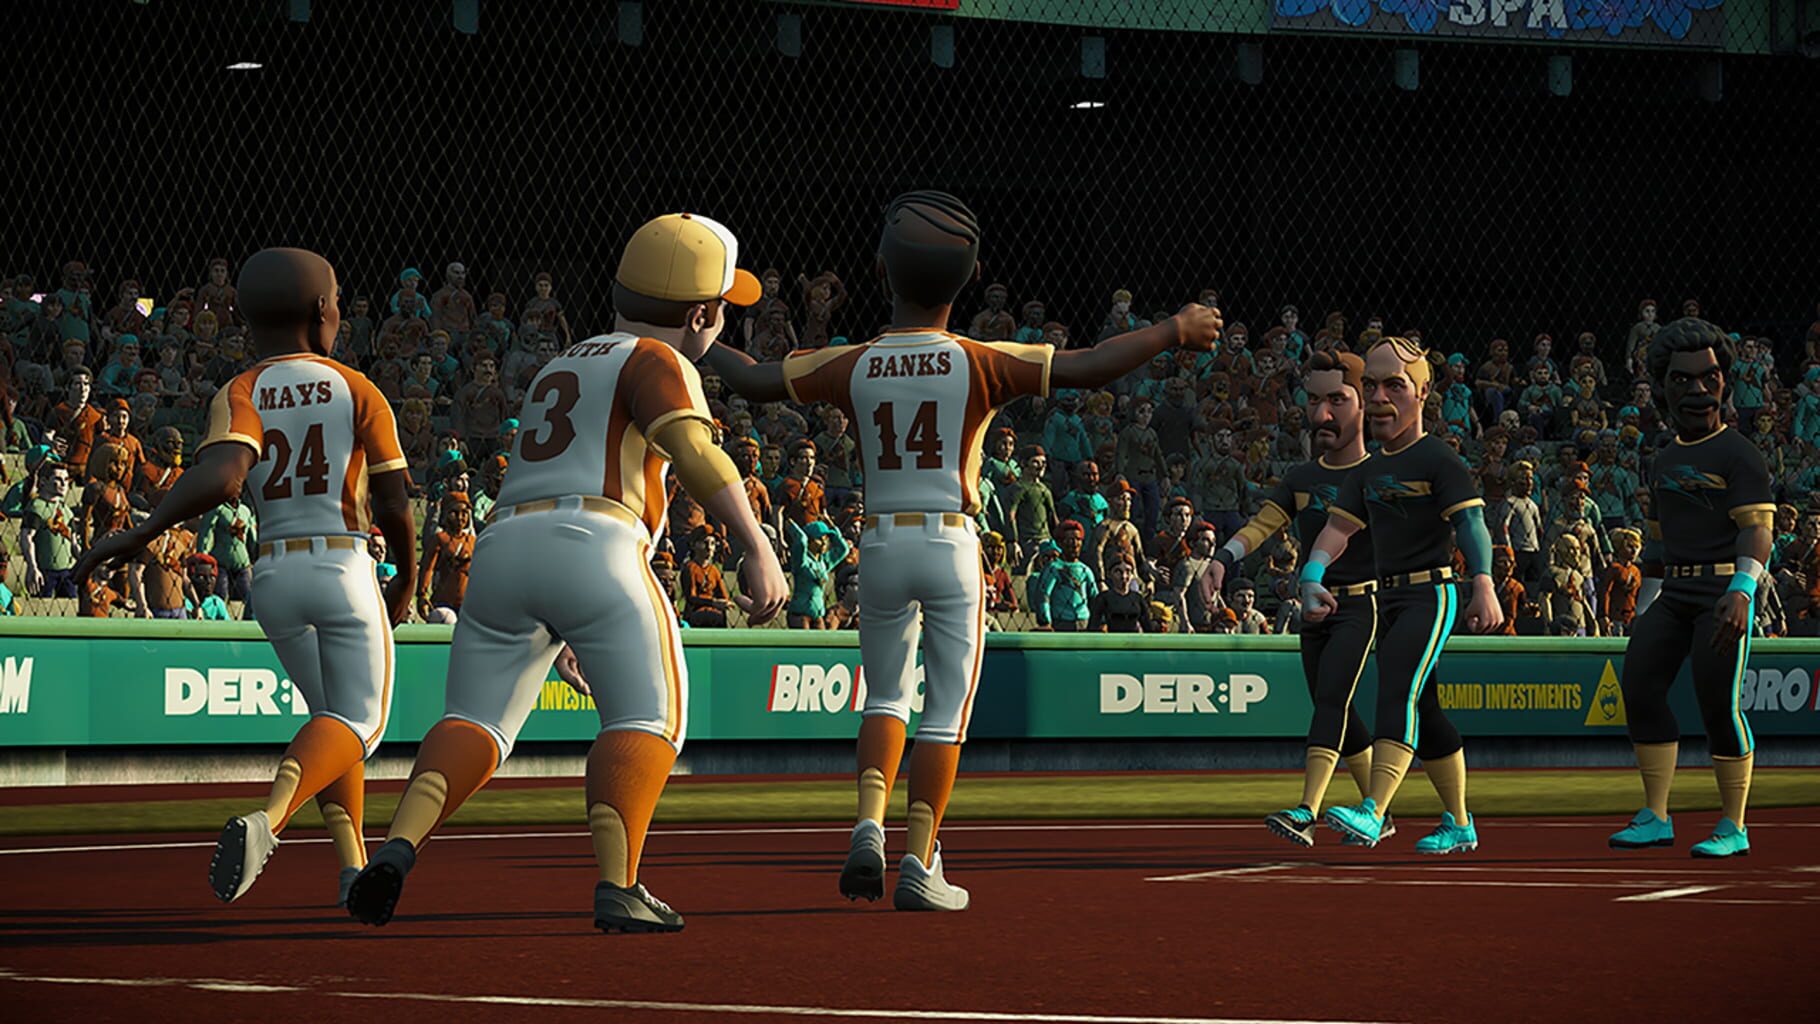 Super Mega Baseball 4: Peril Point Stadium screenshot